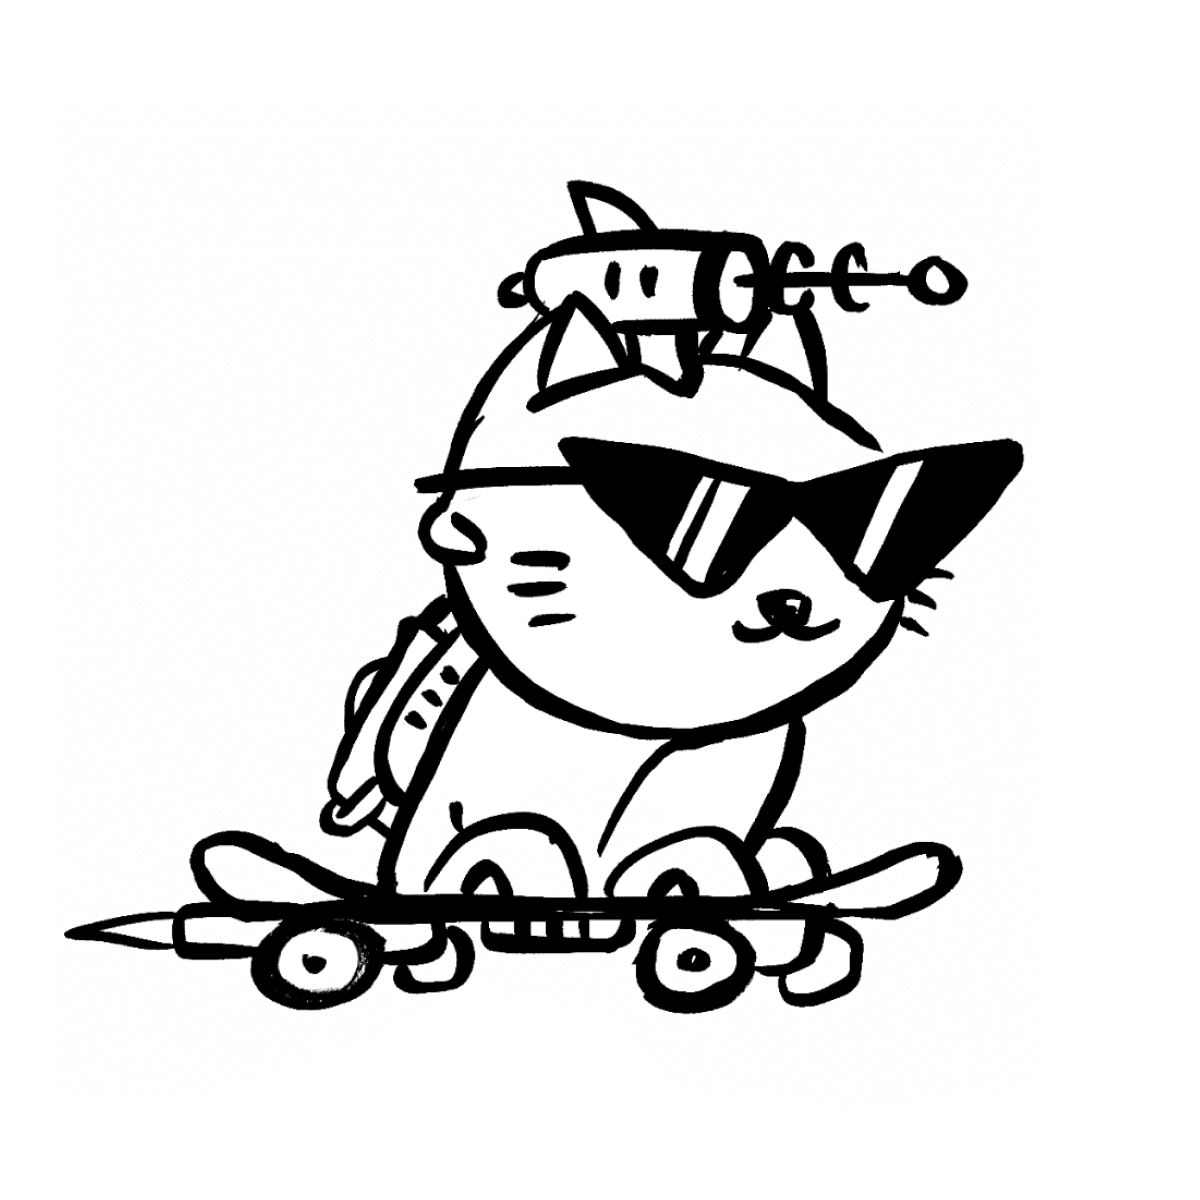 Skate Kittyboto